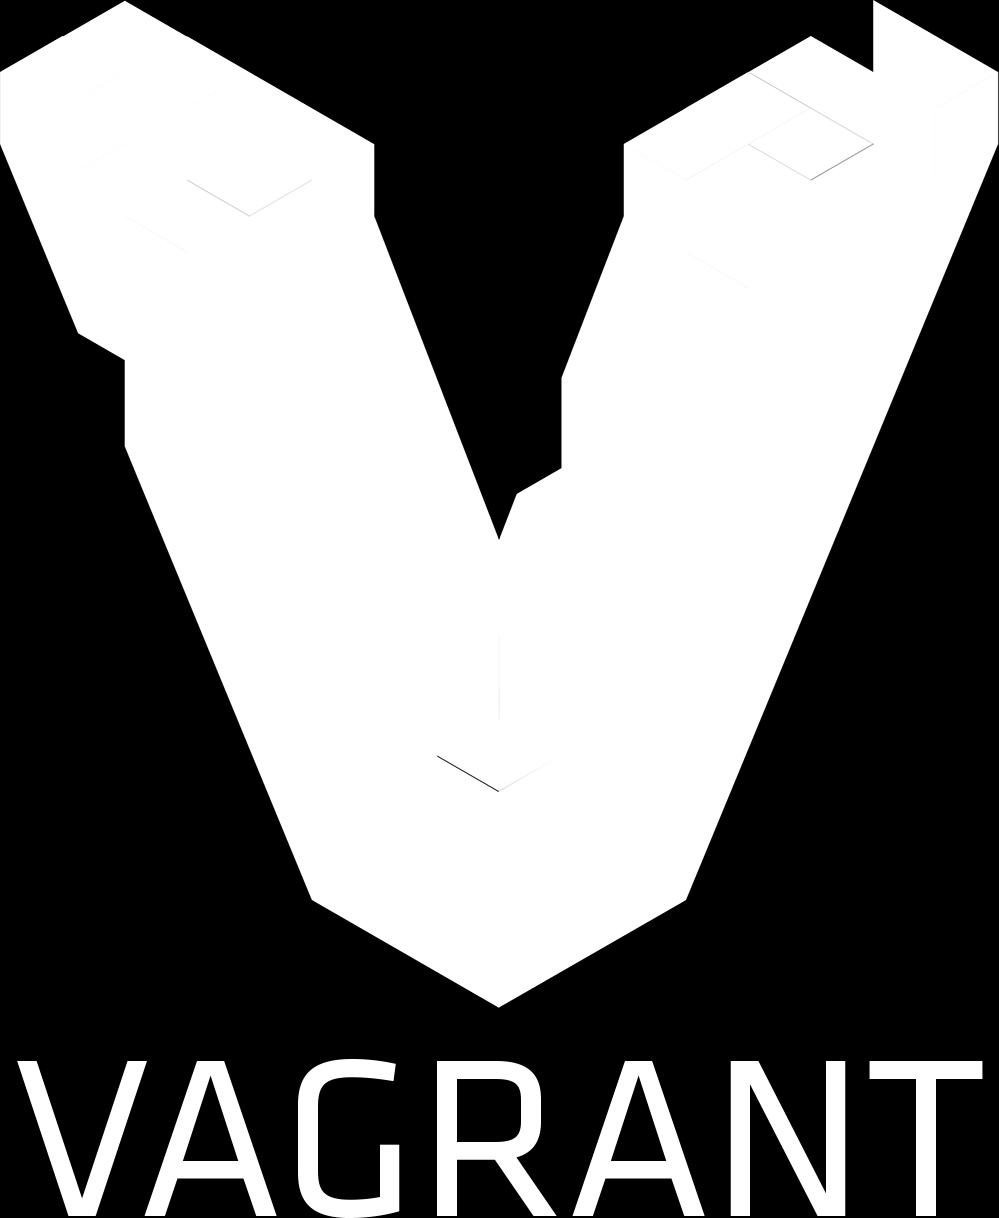 Vagrant Configuration tool for (VirtualBox) VM setup and provisioning.